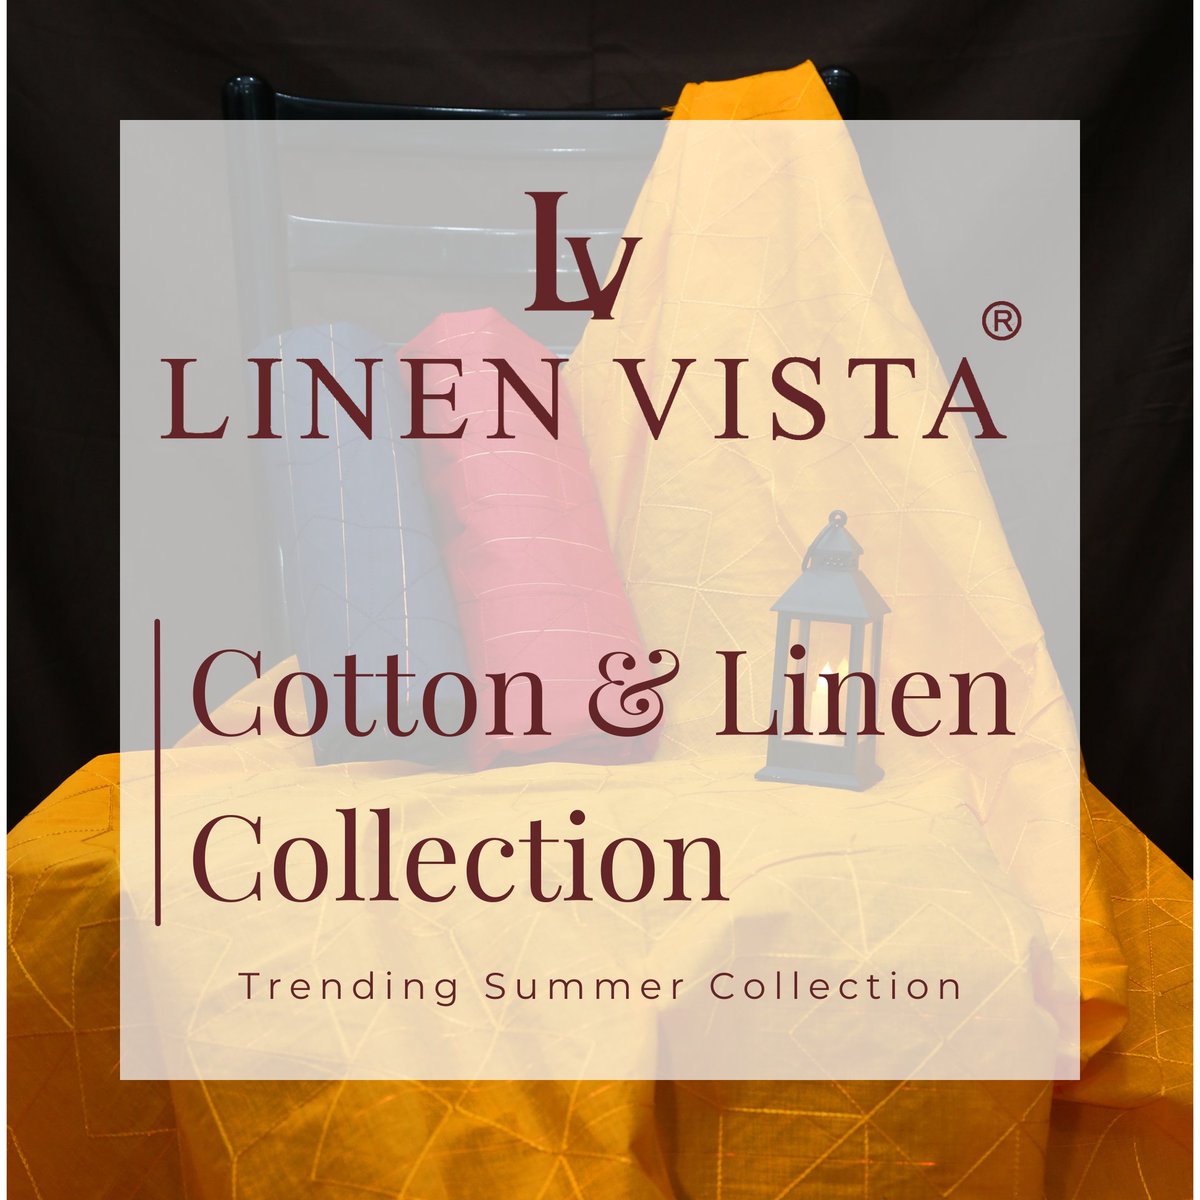 The Perfect mixture of Style & Fashion #LinenVistaCollection #SummerCollection.
.
.
LinenVista.com
.
.
#CottonFabric #LinenFabric #CottonSuiting #WhiteCotton #CottonShirting #LustreCotton #PureCotton #GizaCotton #LawnCotton #CottonEmbriodery #LinenFabric #LinenClothing